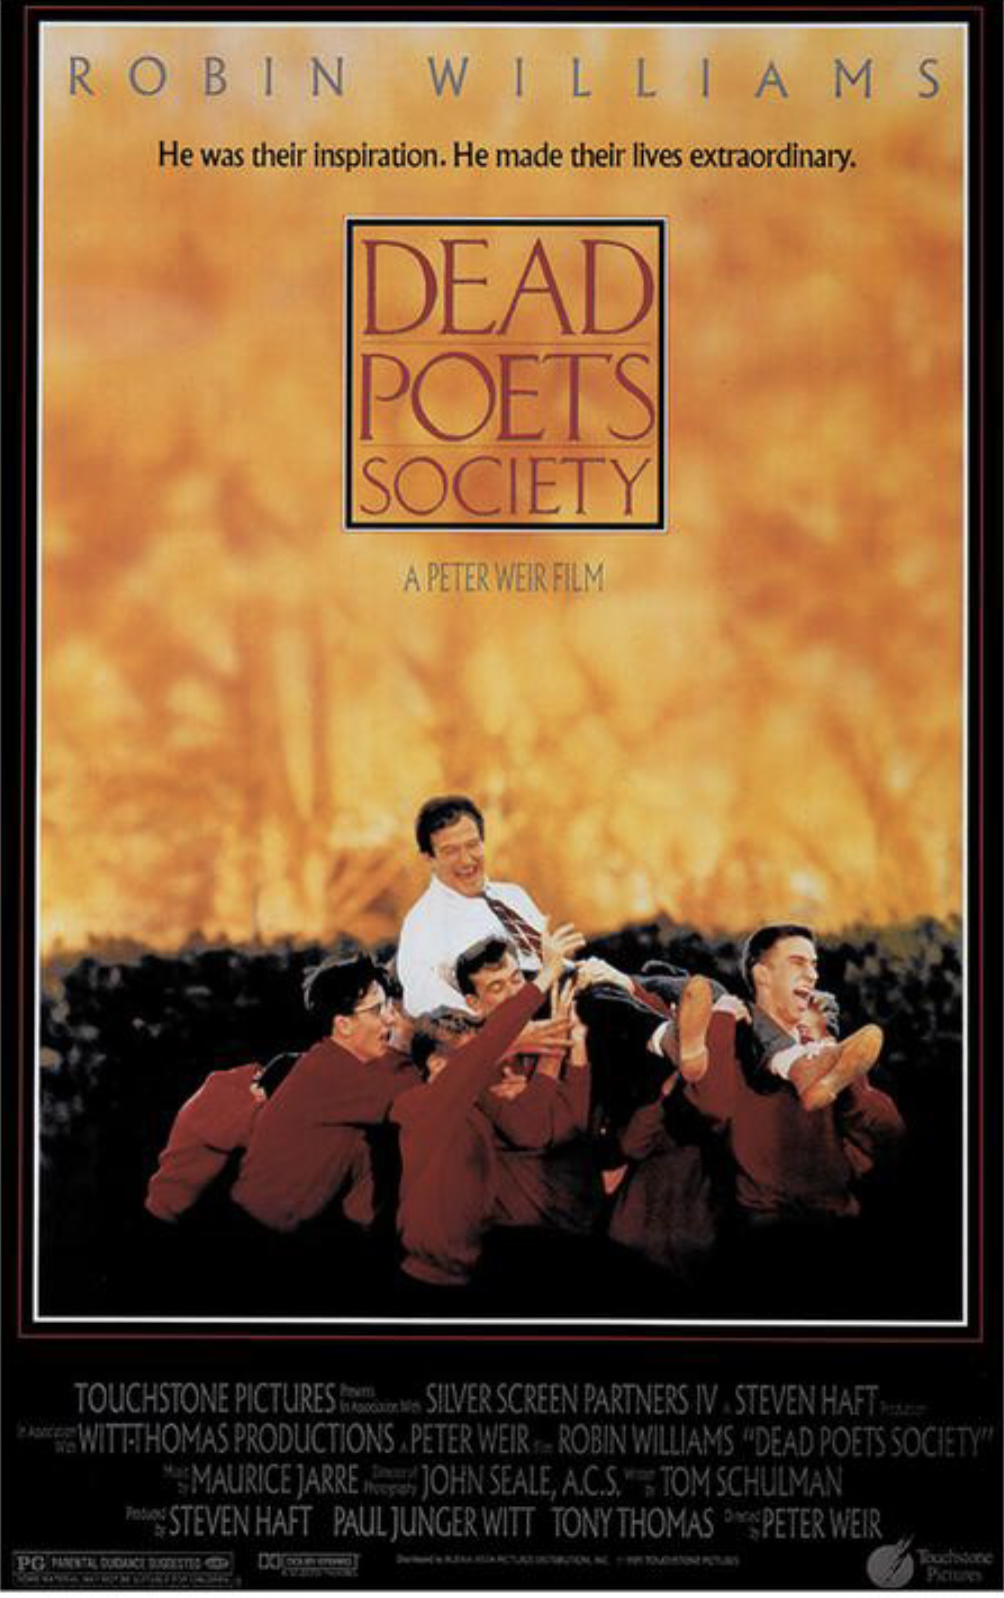 Dead poets society poster.jpeg